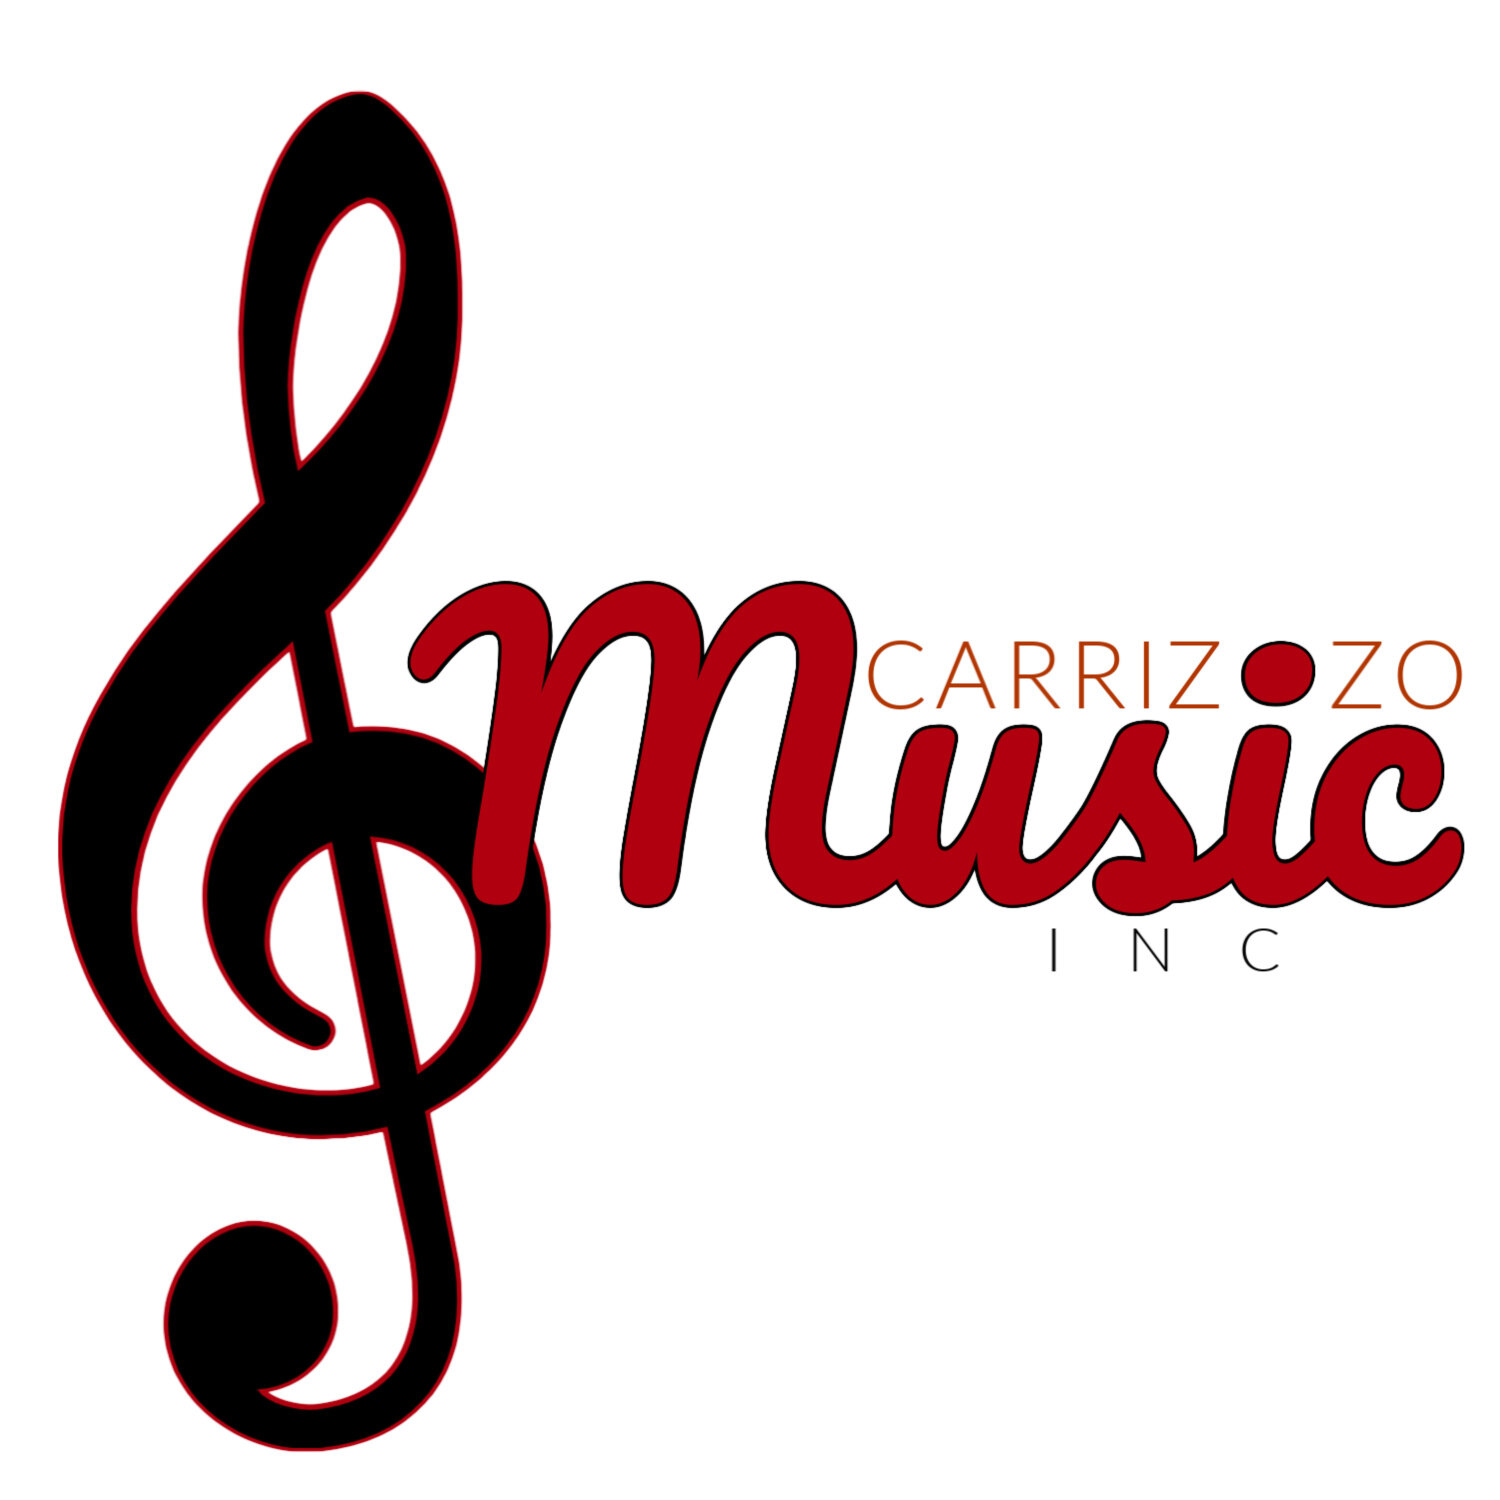 Carrizozo Music